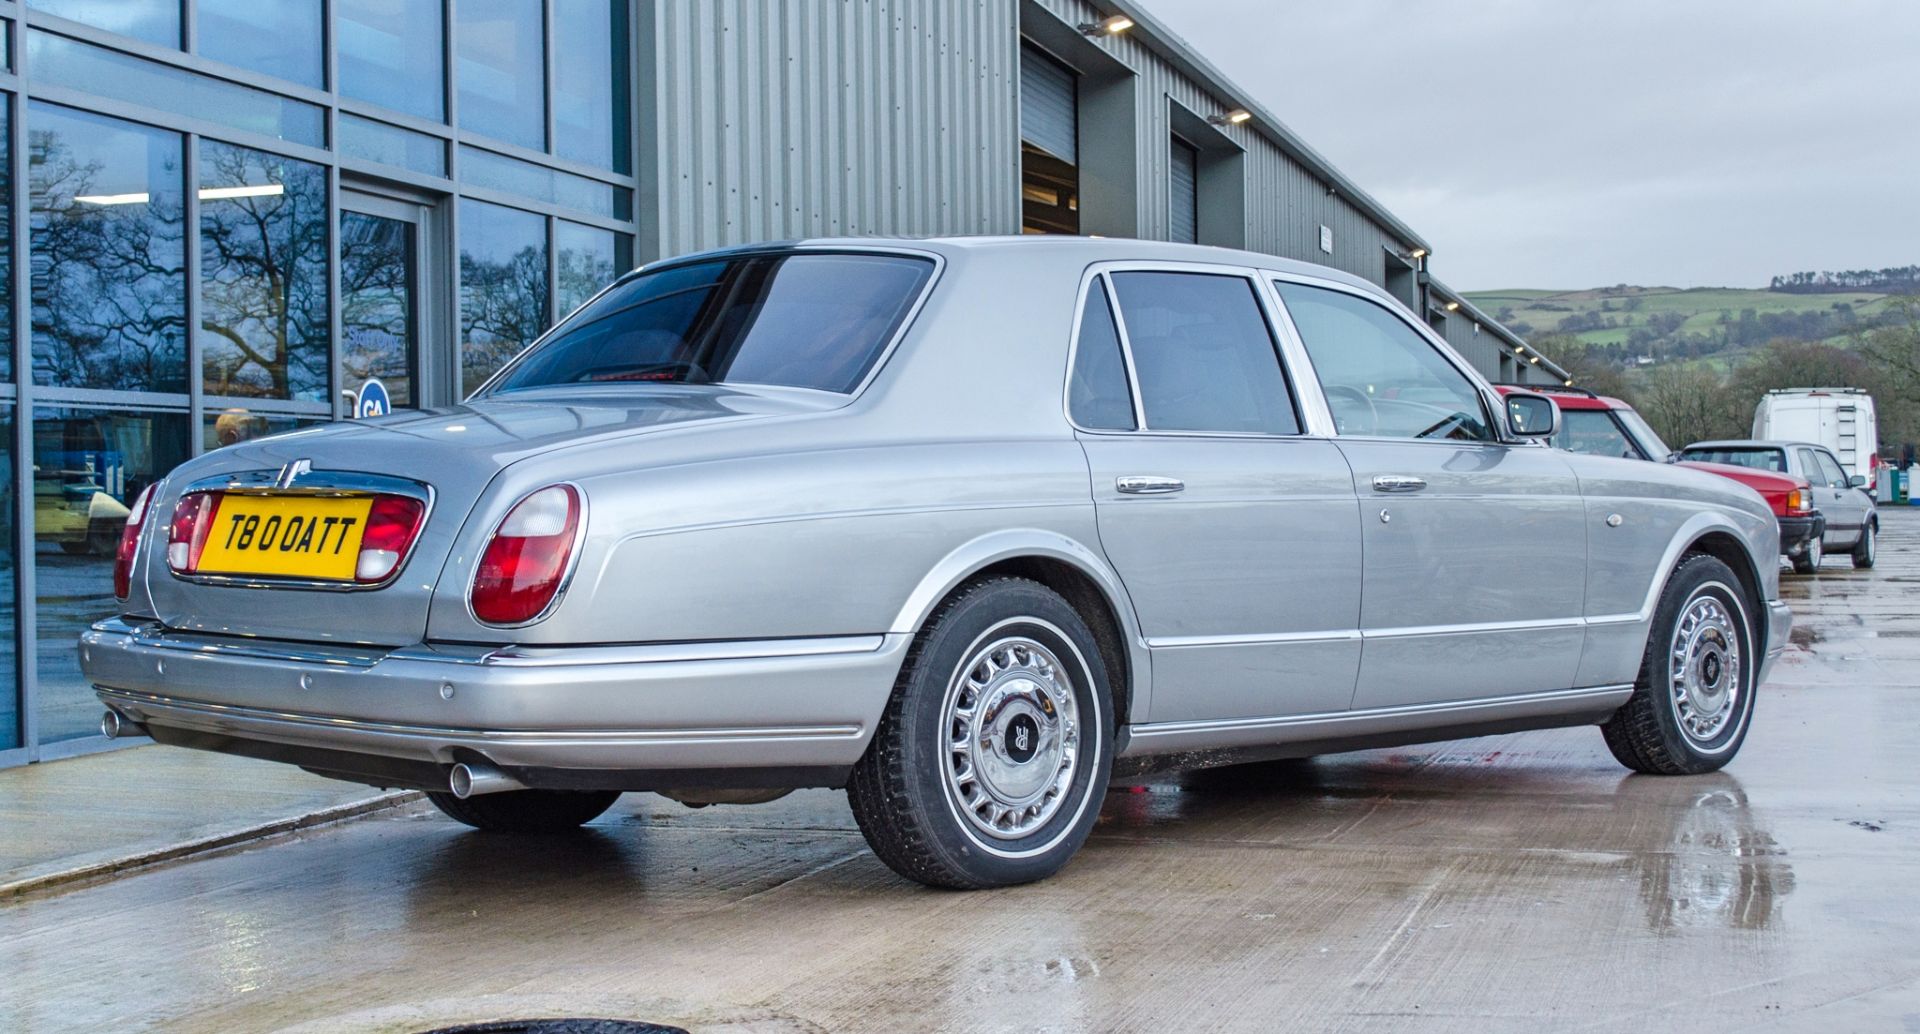 2000 Rolls-Royce Silver Seraph 5.4 litre V12 4 door saloon - Image 5 of 55